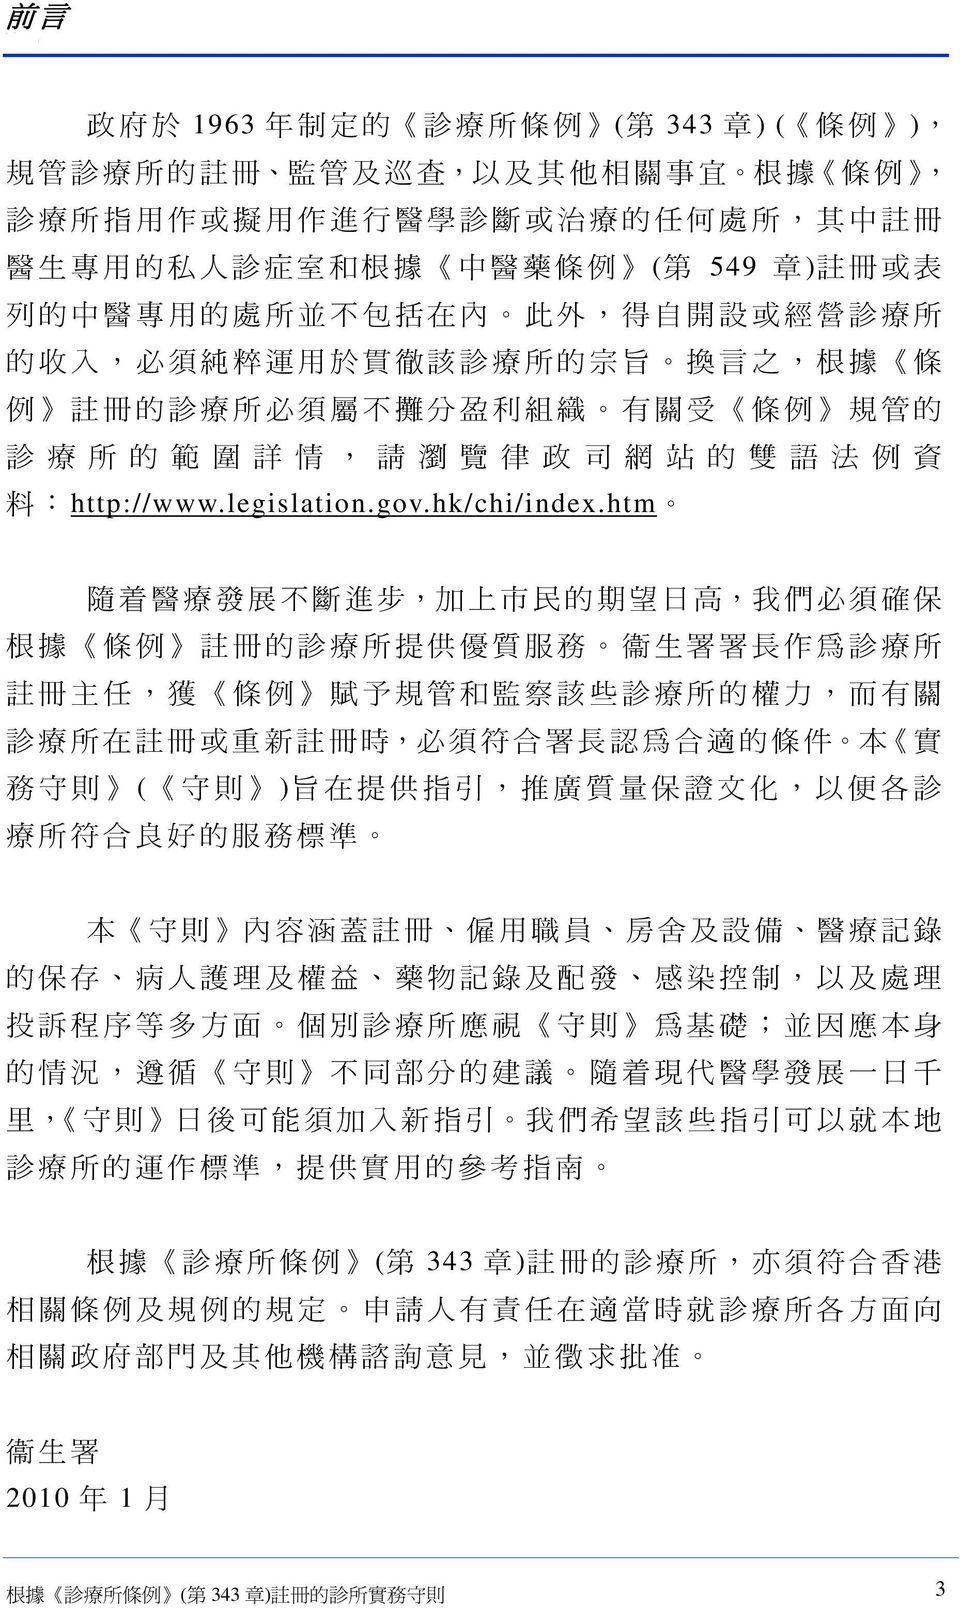 律 政 司 網 站 的 雙 語 法 例 資 料 :http://www.legislation.gov.hk/chi/index.